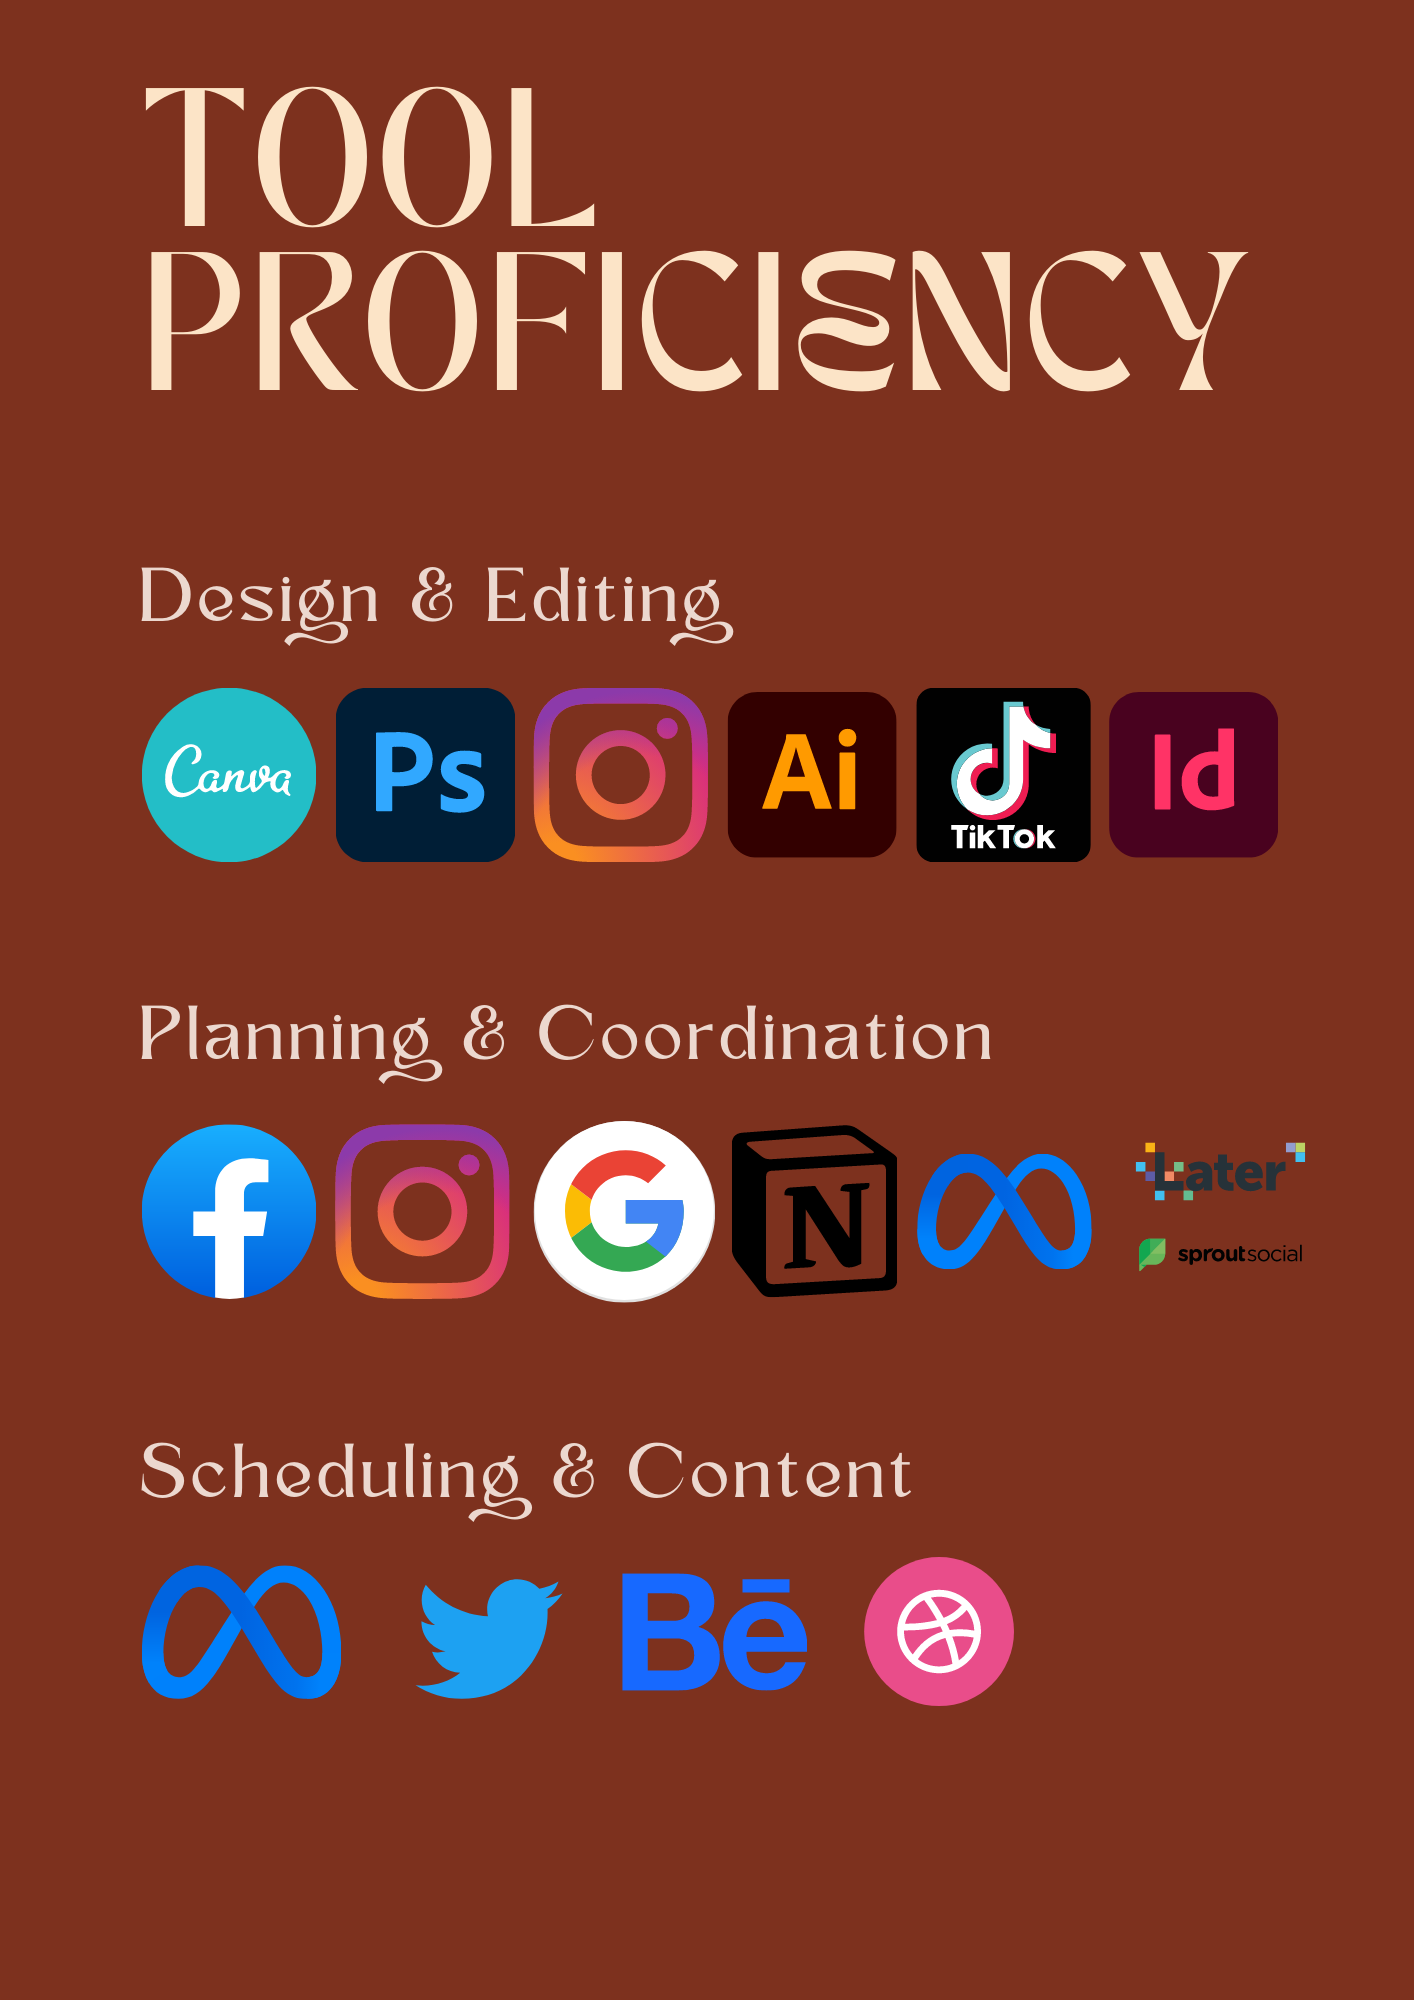 TOOL
PROFICIENCY

Design &amp; Editing,
Gr i
(&lt; Al d

TikTok

Planning &amp; Coordination

ASIC,

Scheduling, &amp; Content

7